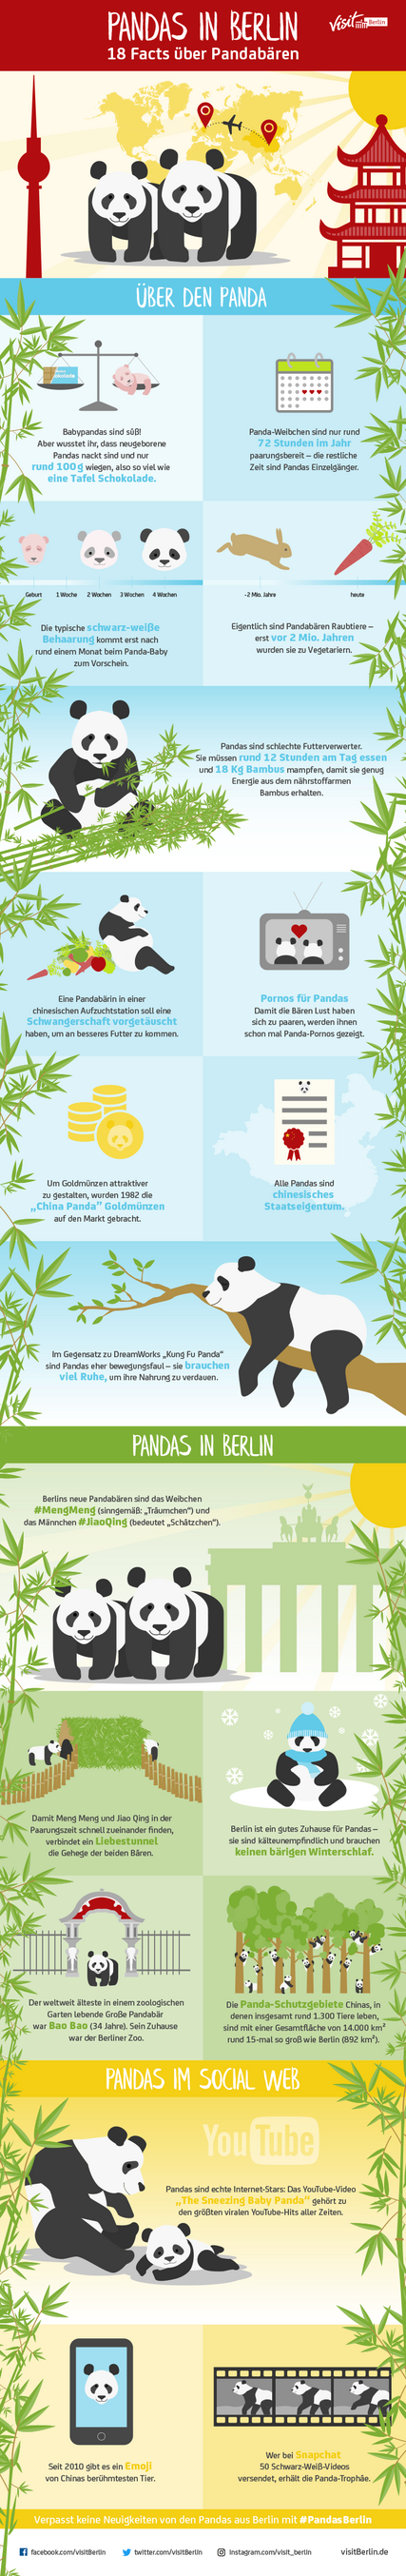 Pandas in Berlin, die Infografik: 18 Fun Facts über Pandabären